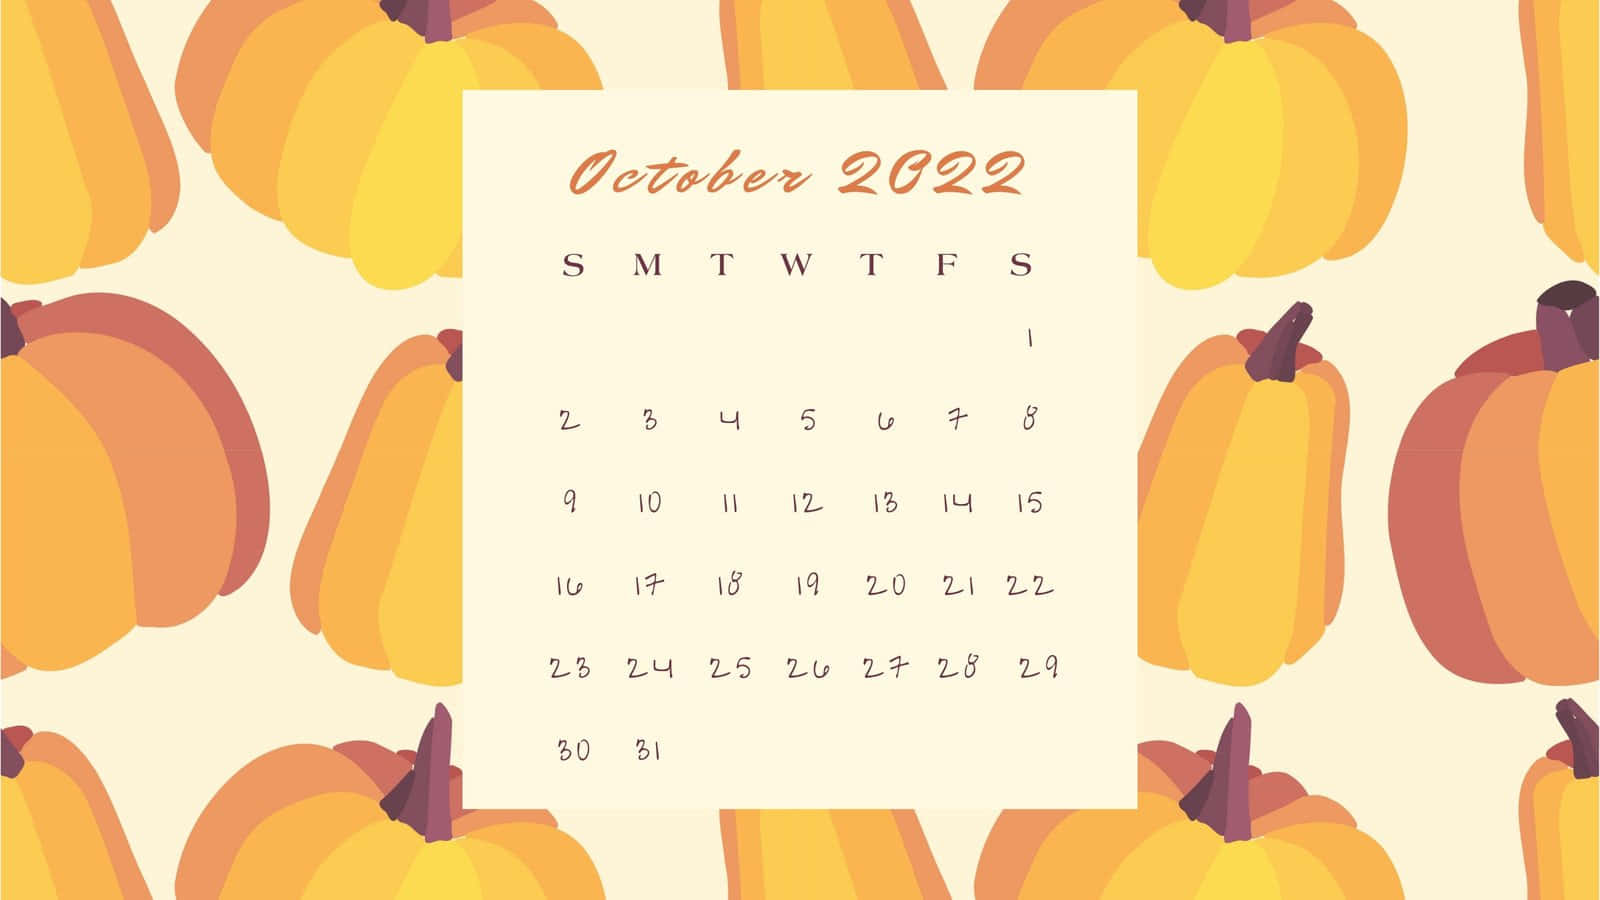 October 2020 Calendar With Pumpkins On It Wallpaper